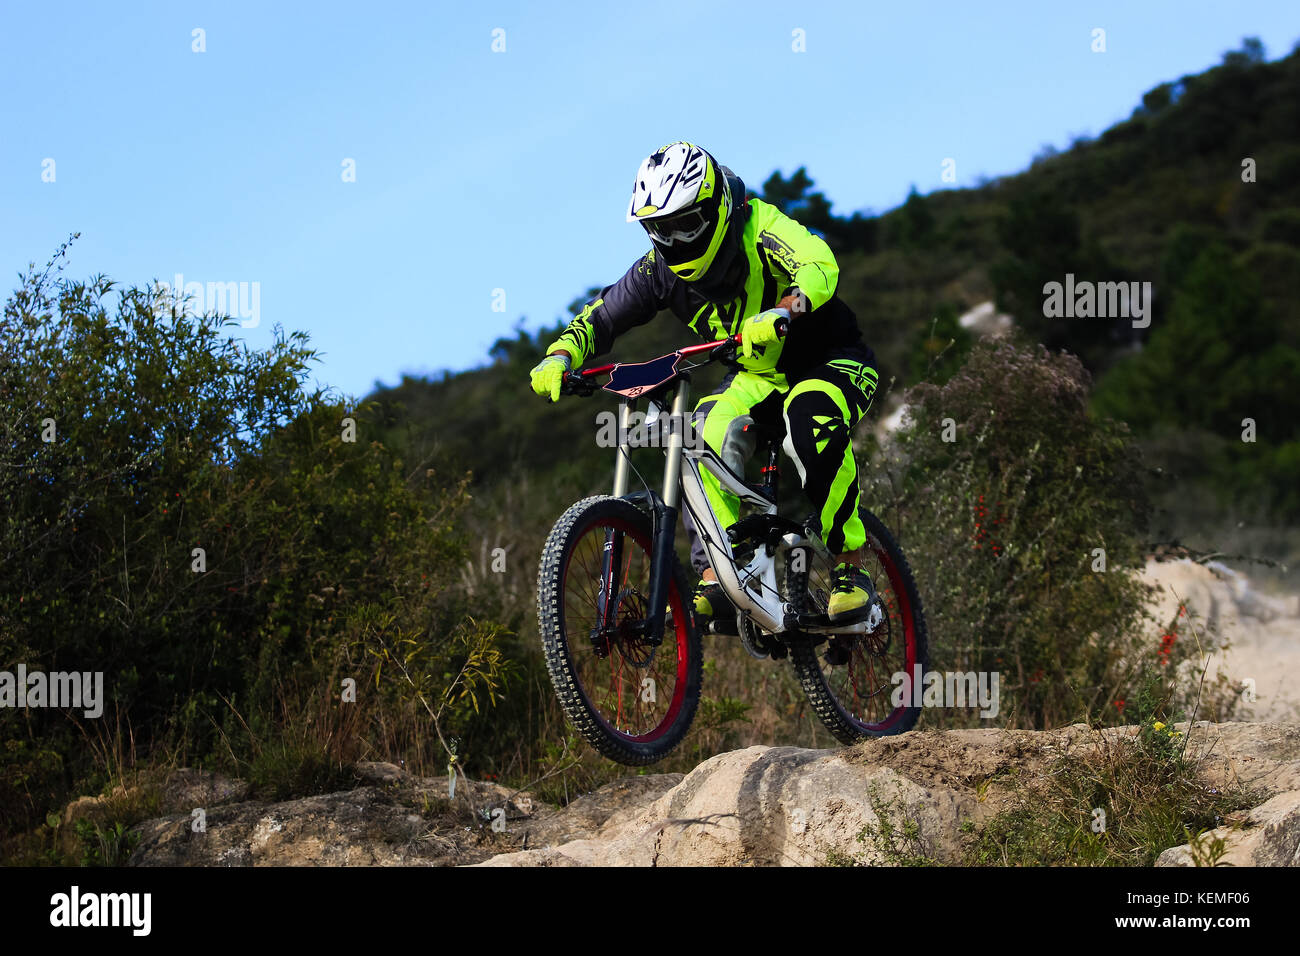 Downhill mountain biker on a yellow costume making a small jump Stock Photo